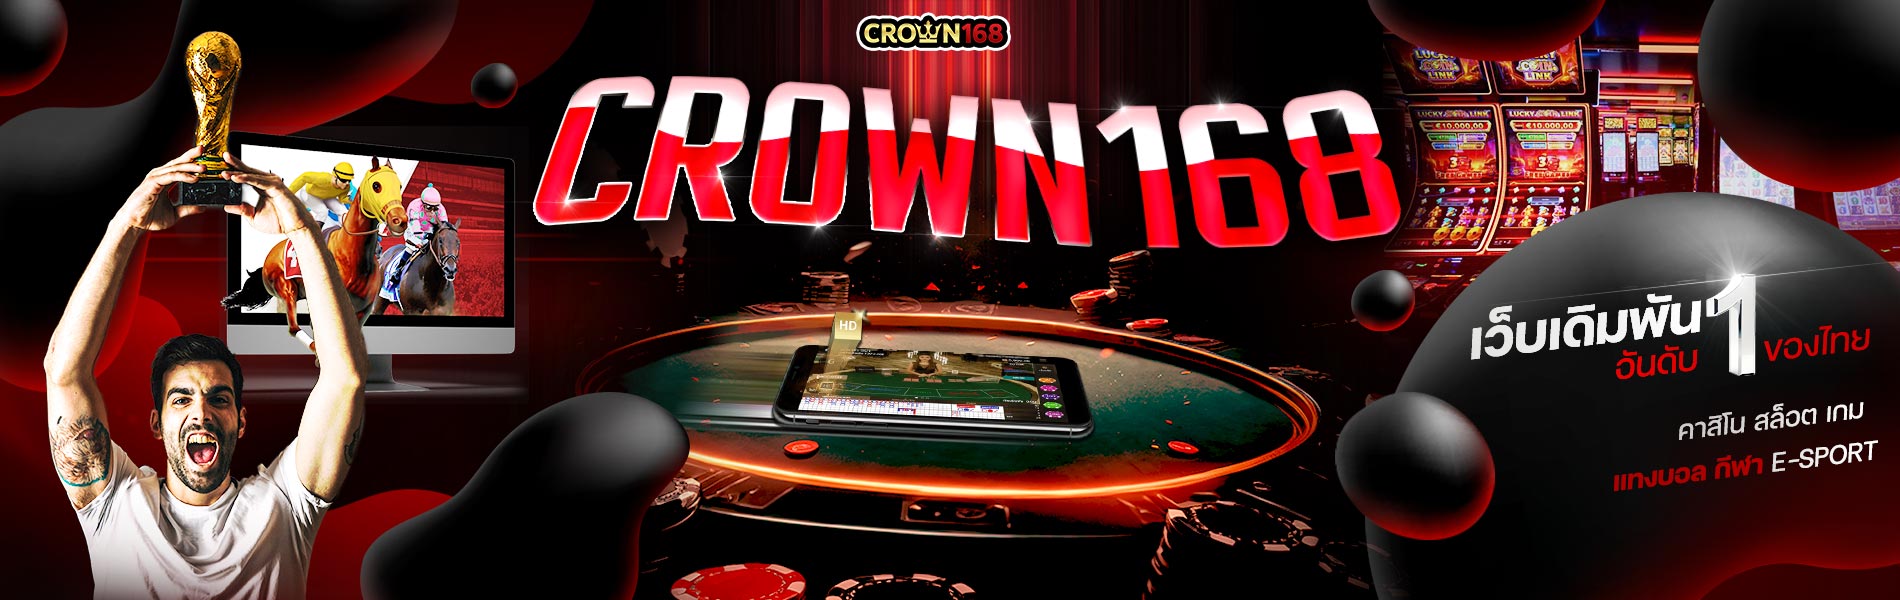 Crown168--เว็บเดิมพันอันดับ-1-ของไทย-คาสิโน-สล็อต-เกม-แทงบอล-กีฬา-E-Spor